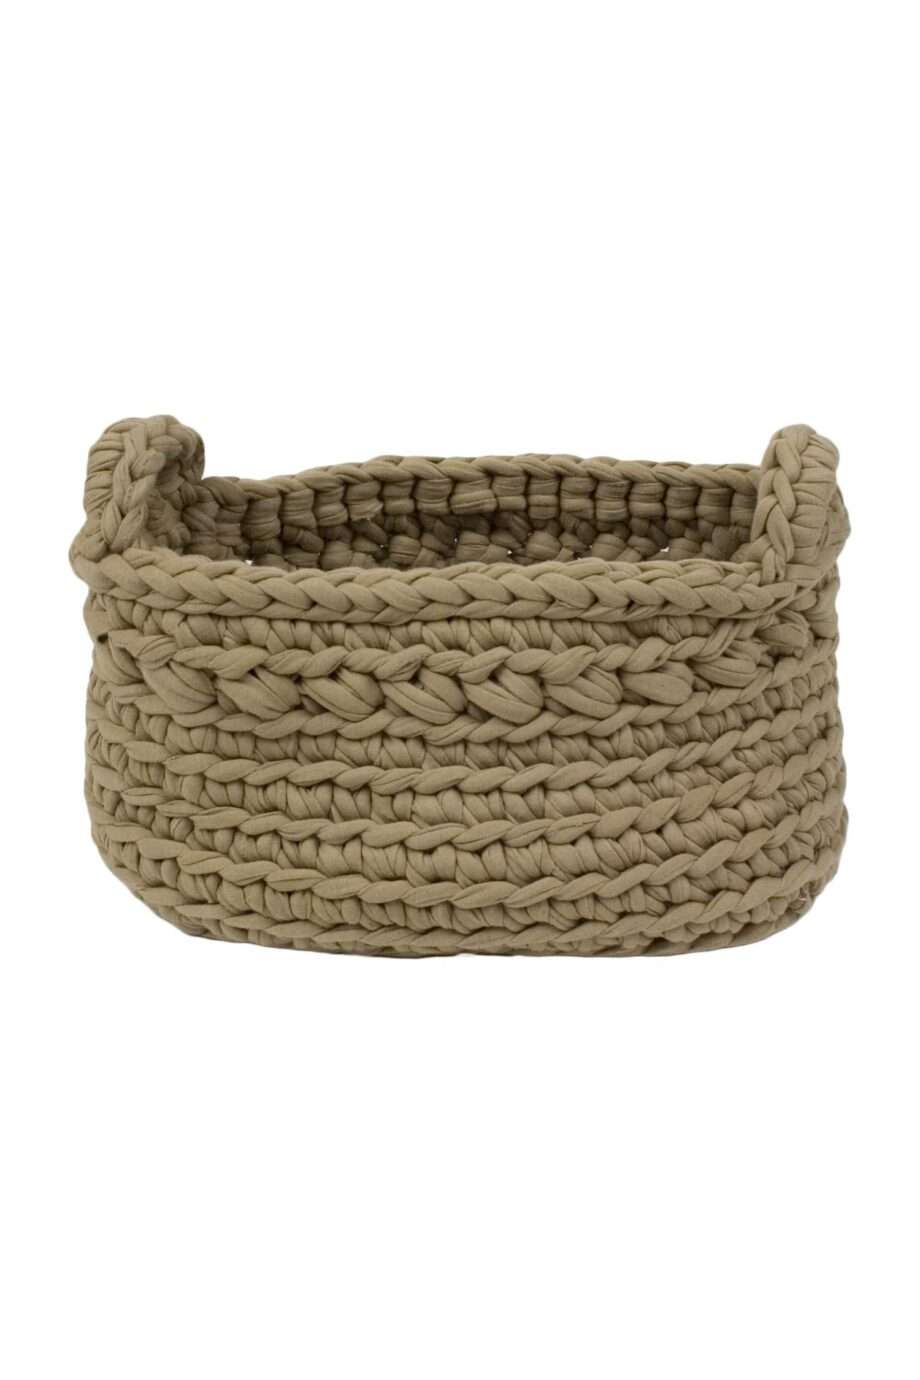 basic latte crochet cotton basket xsmall